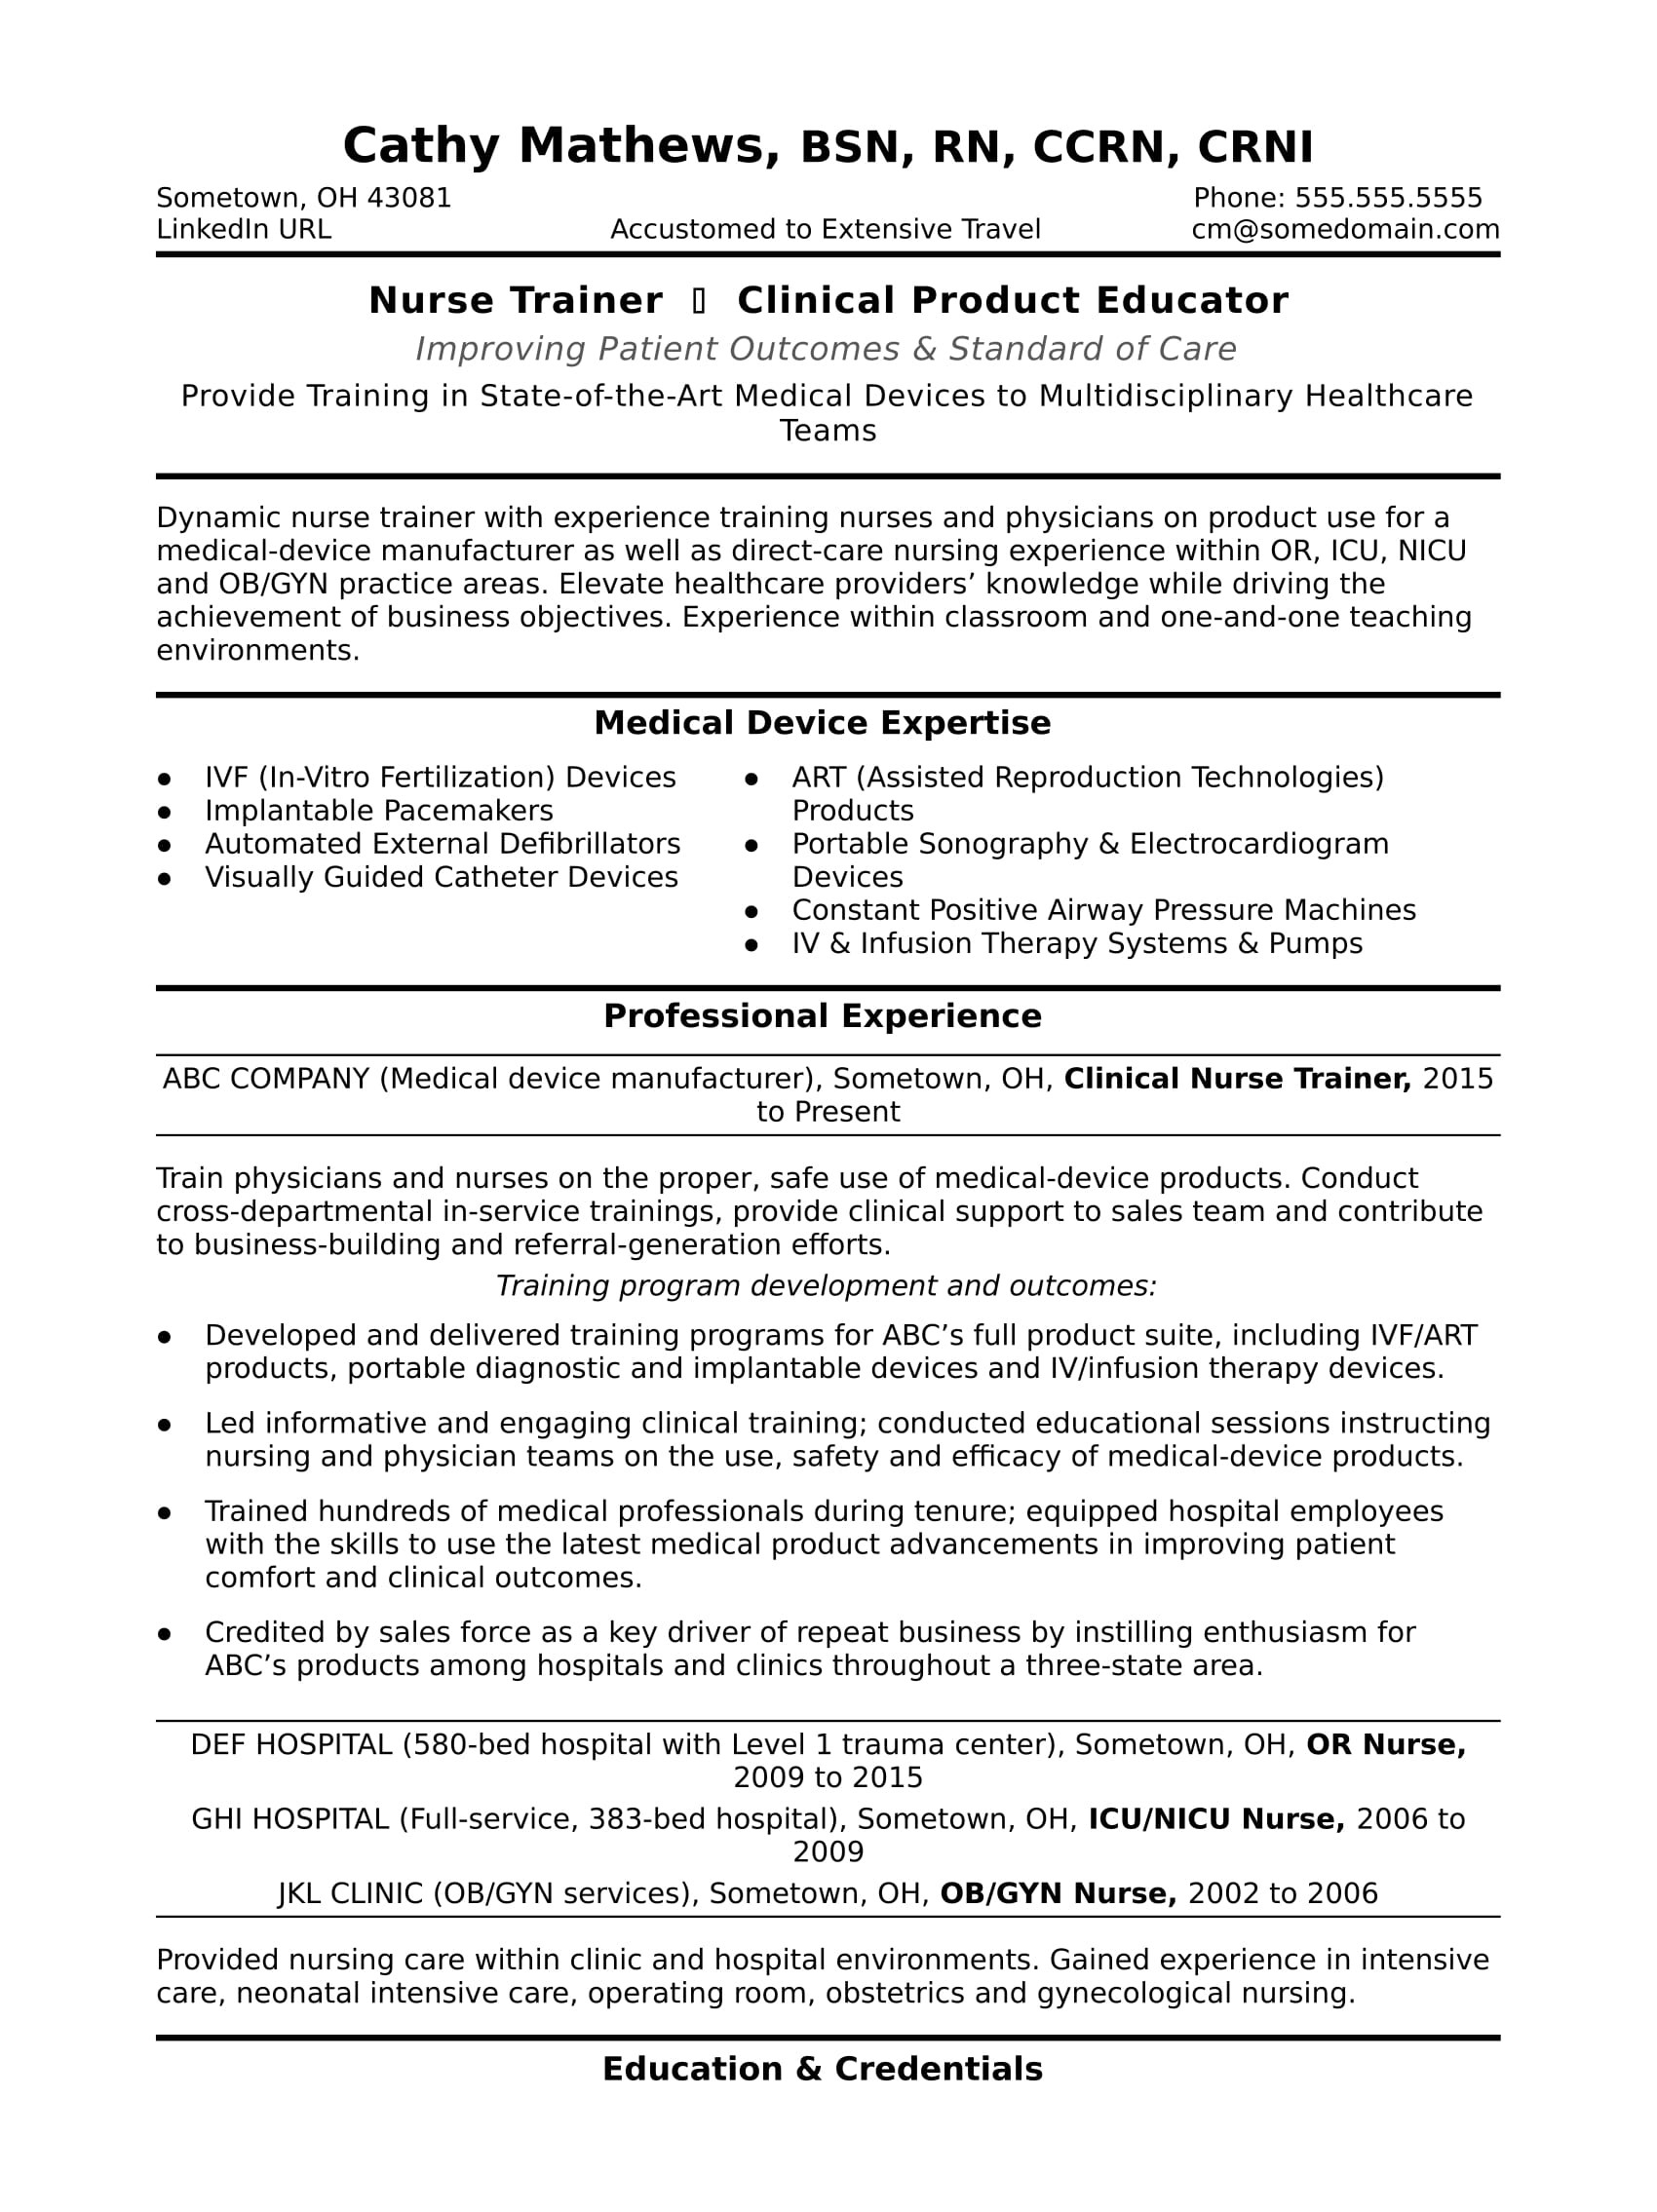 Sample Of Resume Objectives for Rns Nurse Trainer Resume Sample Monster.com